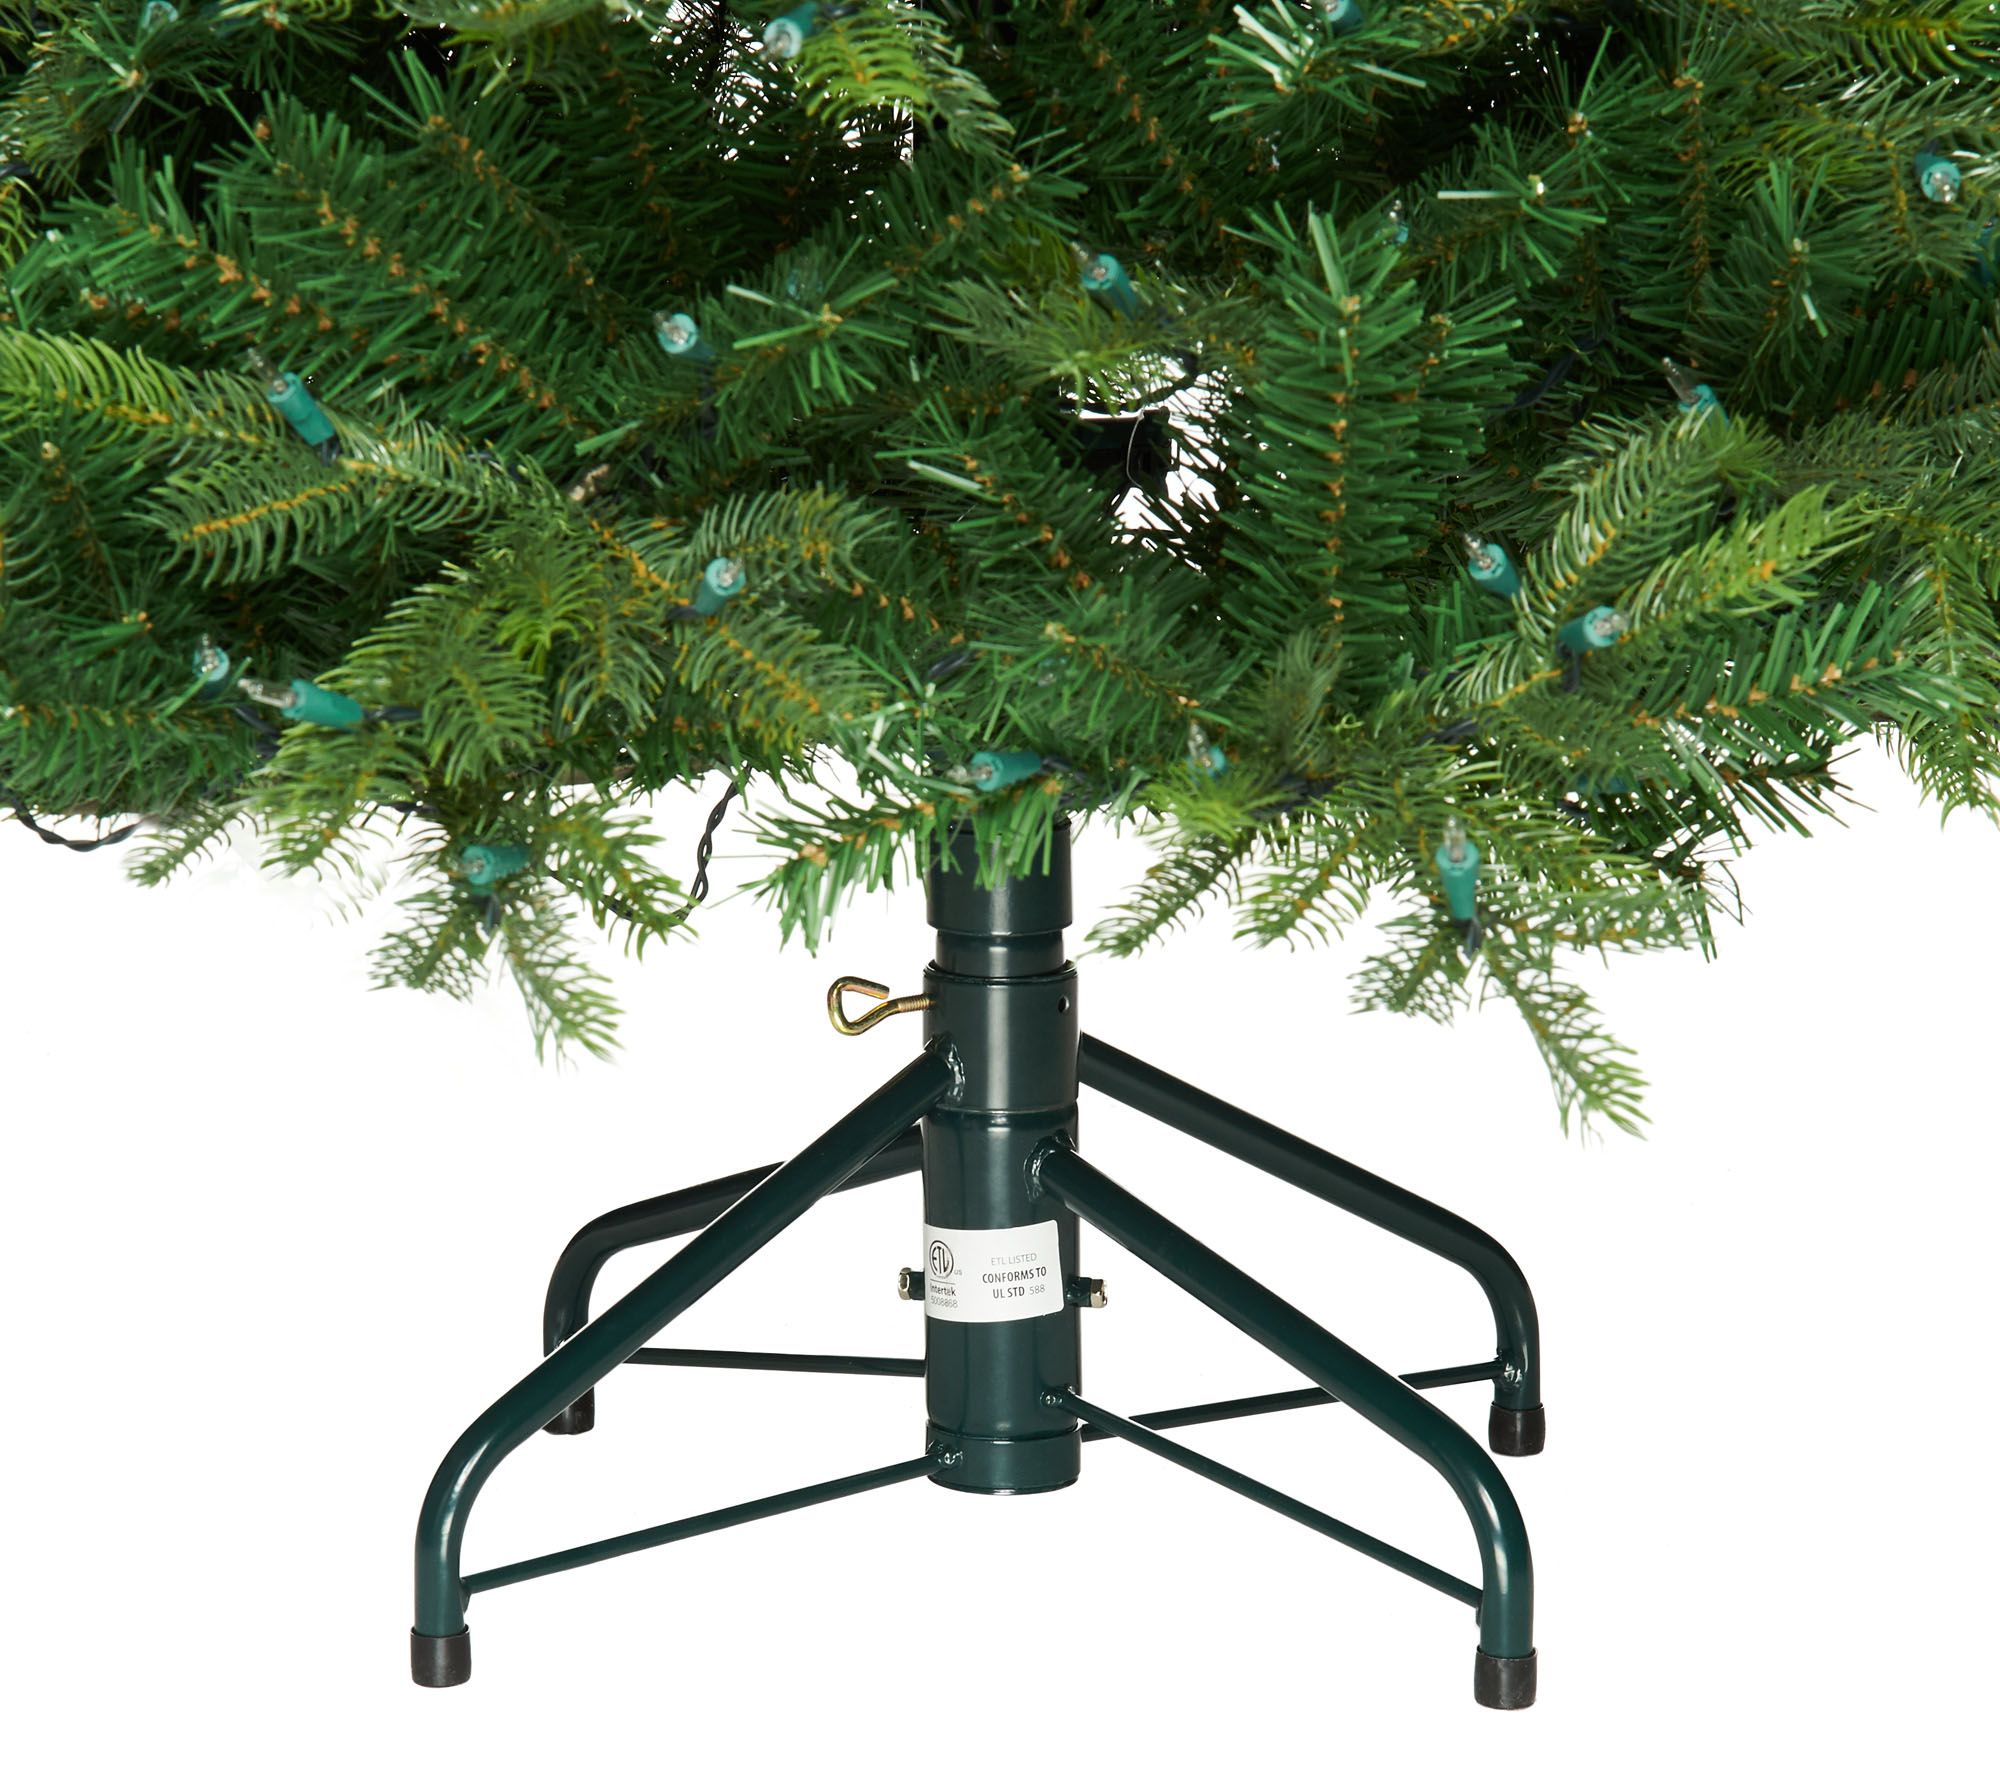 Bethlehem Lights Prelit 7.5' Shenandoah Pine Full Christmas Tree - QVC.com